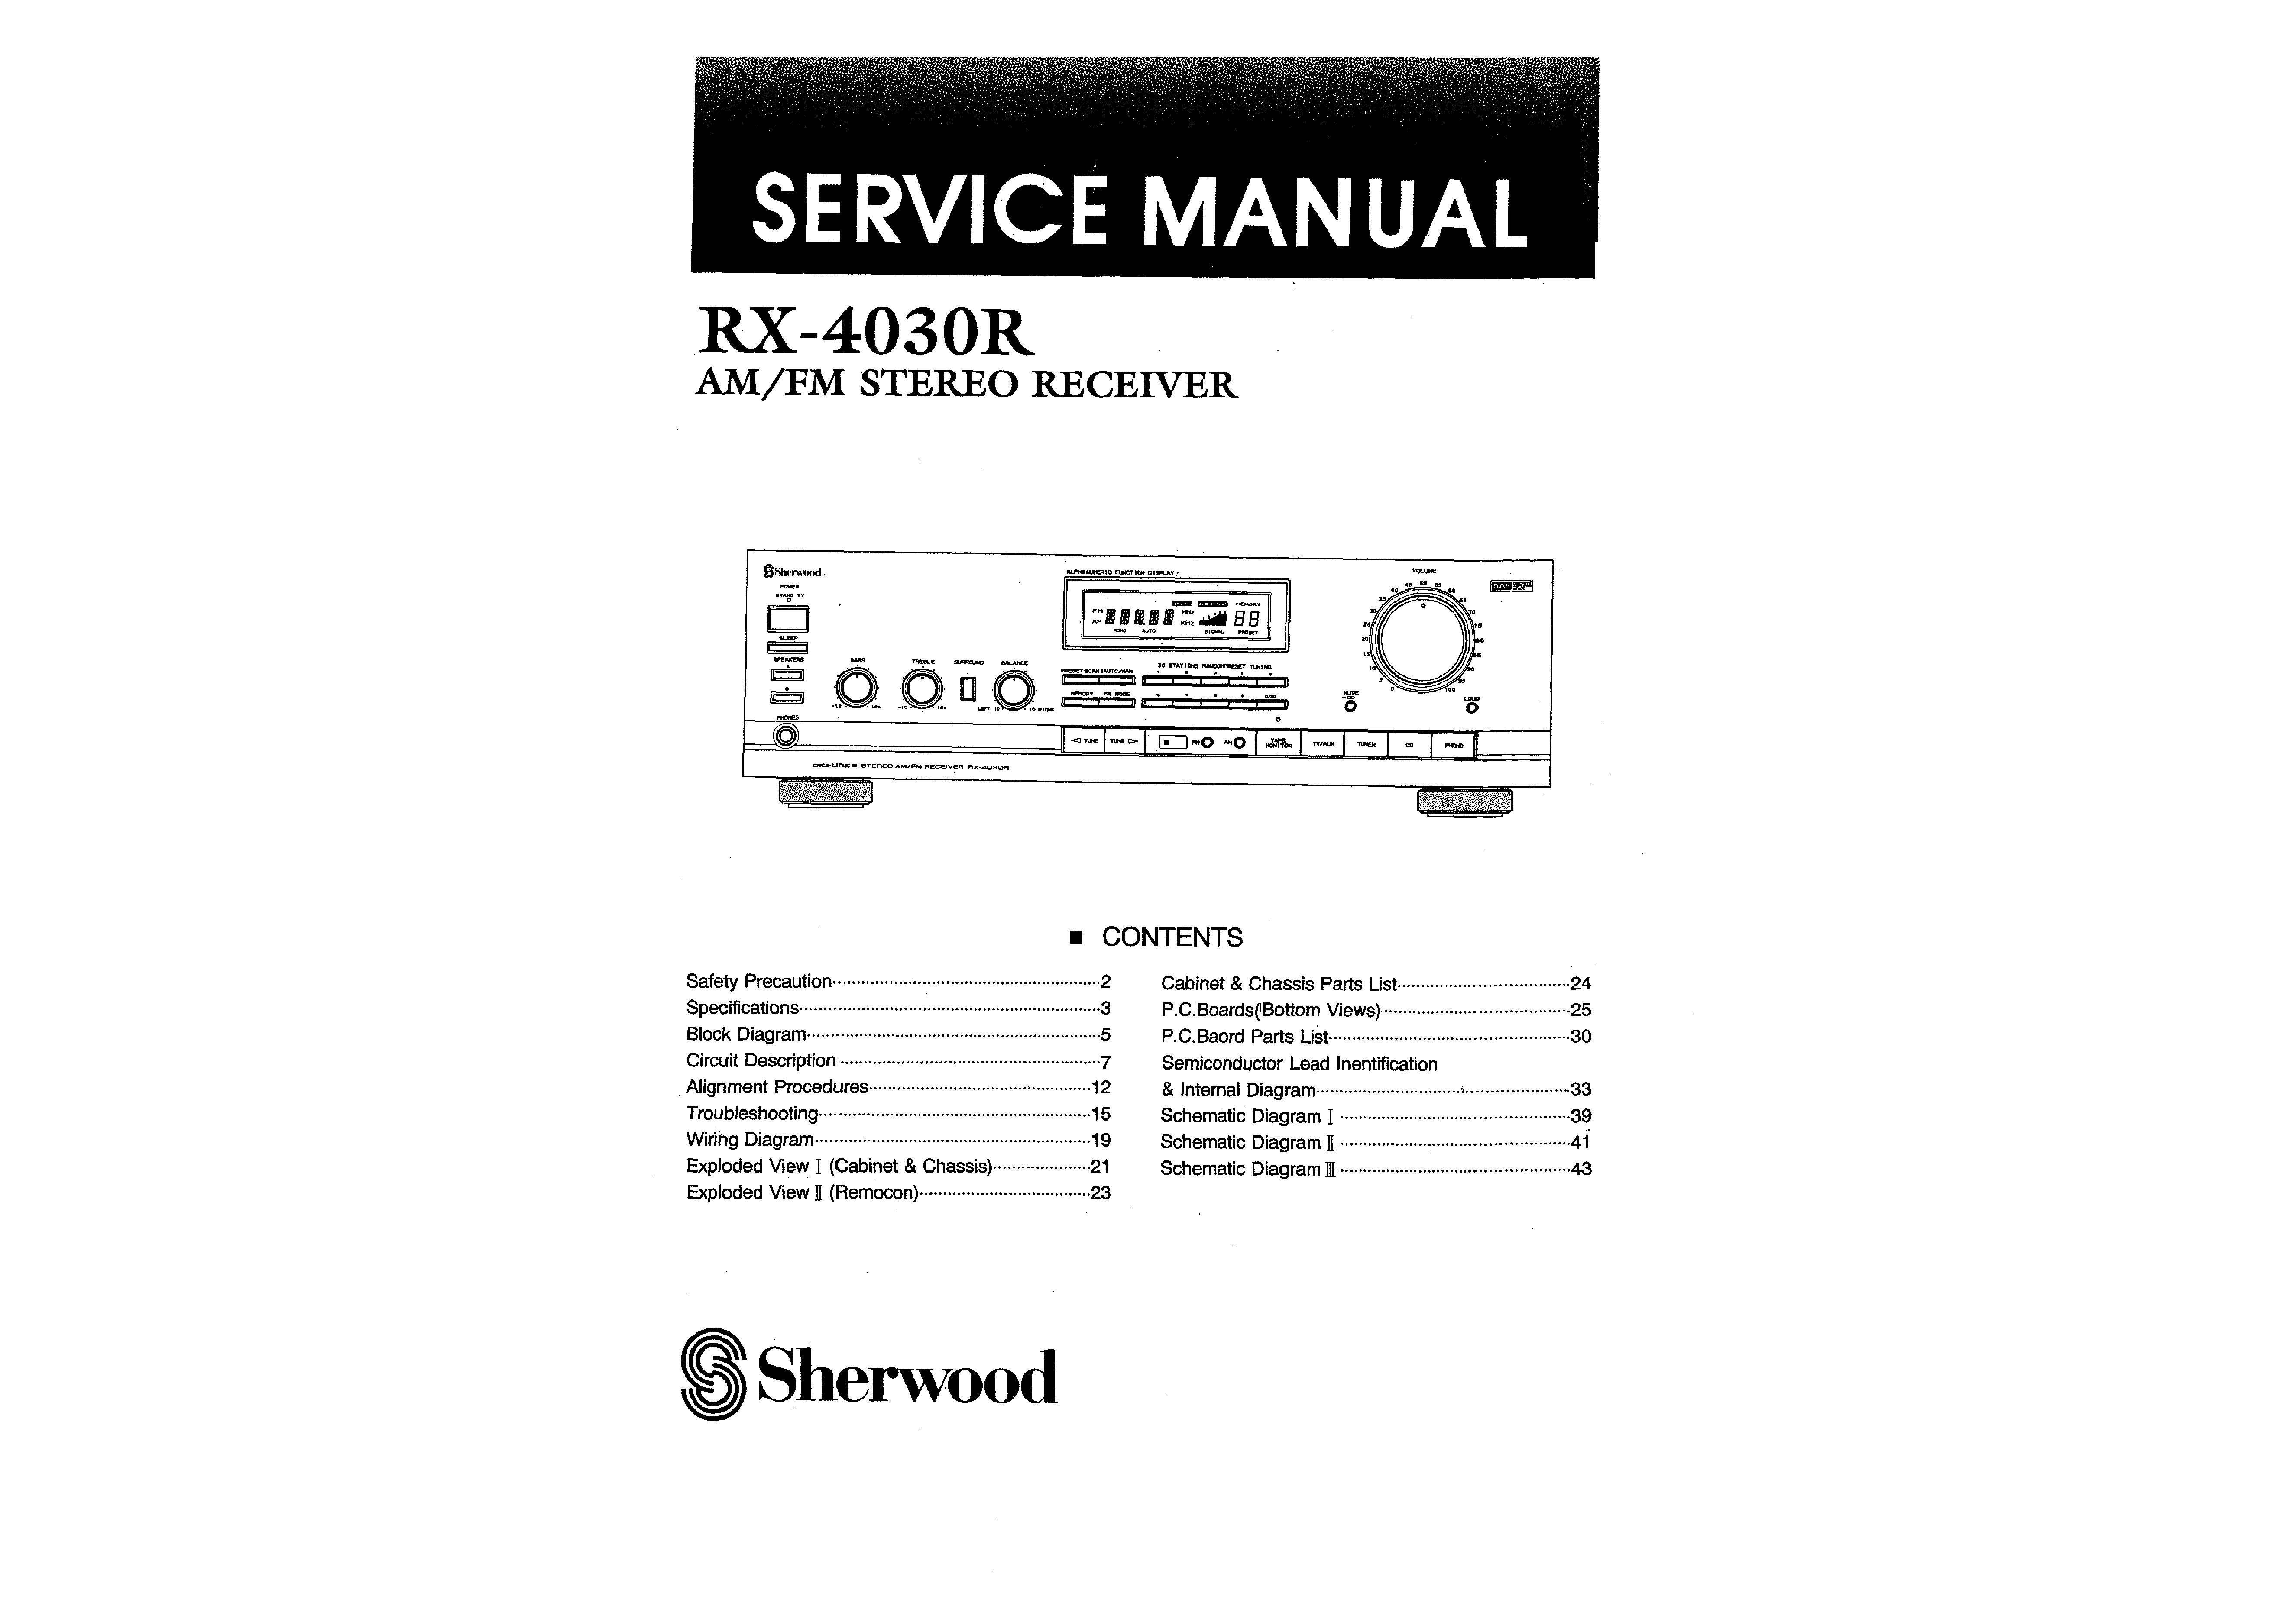 Sherwood RX-4030R